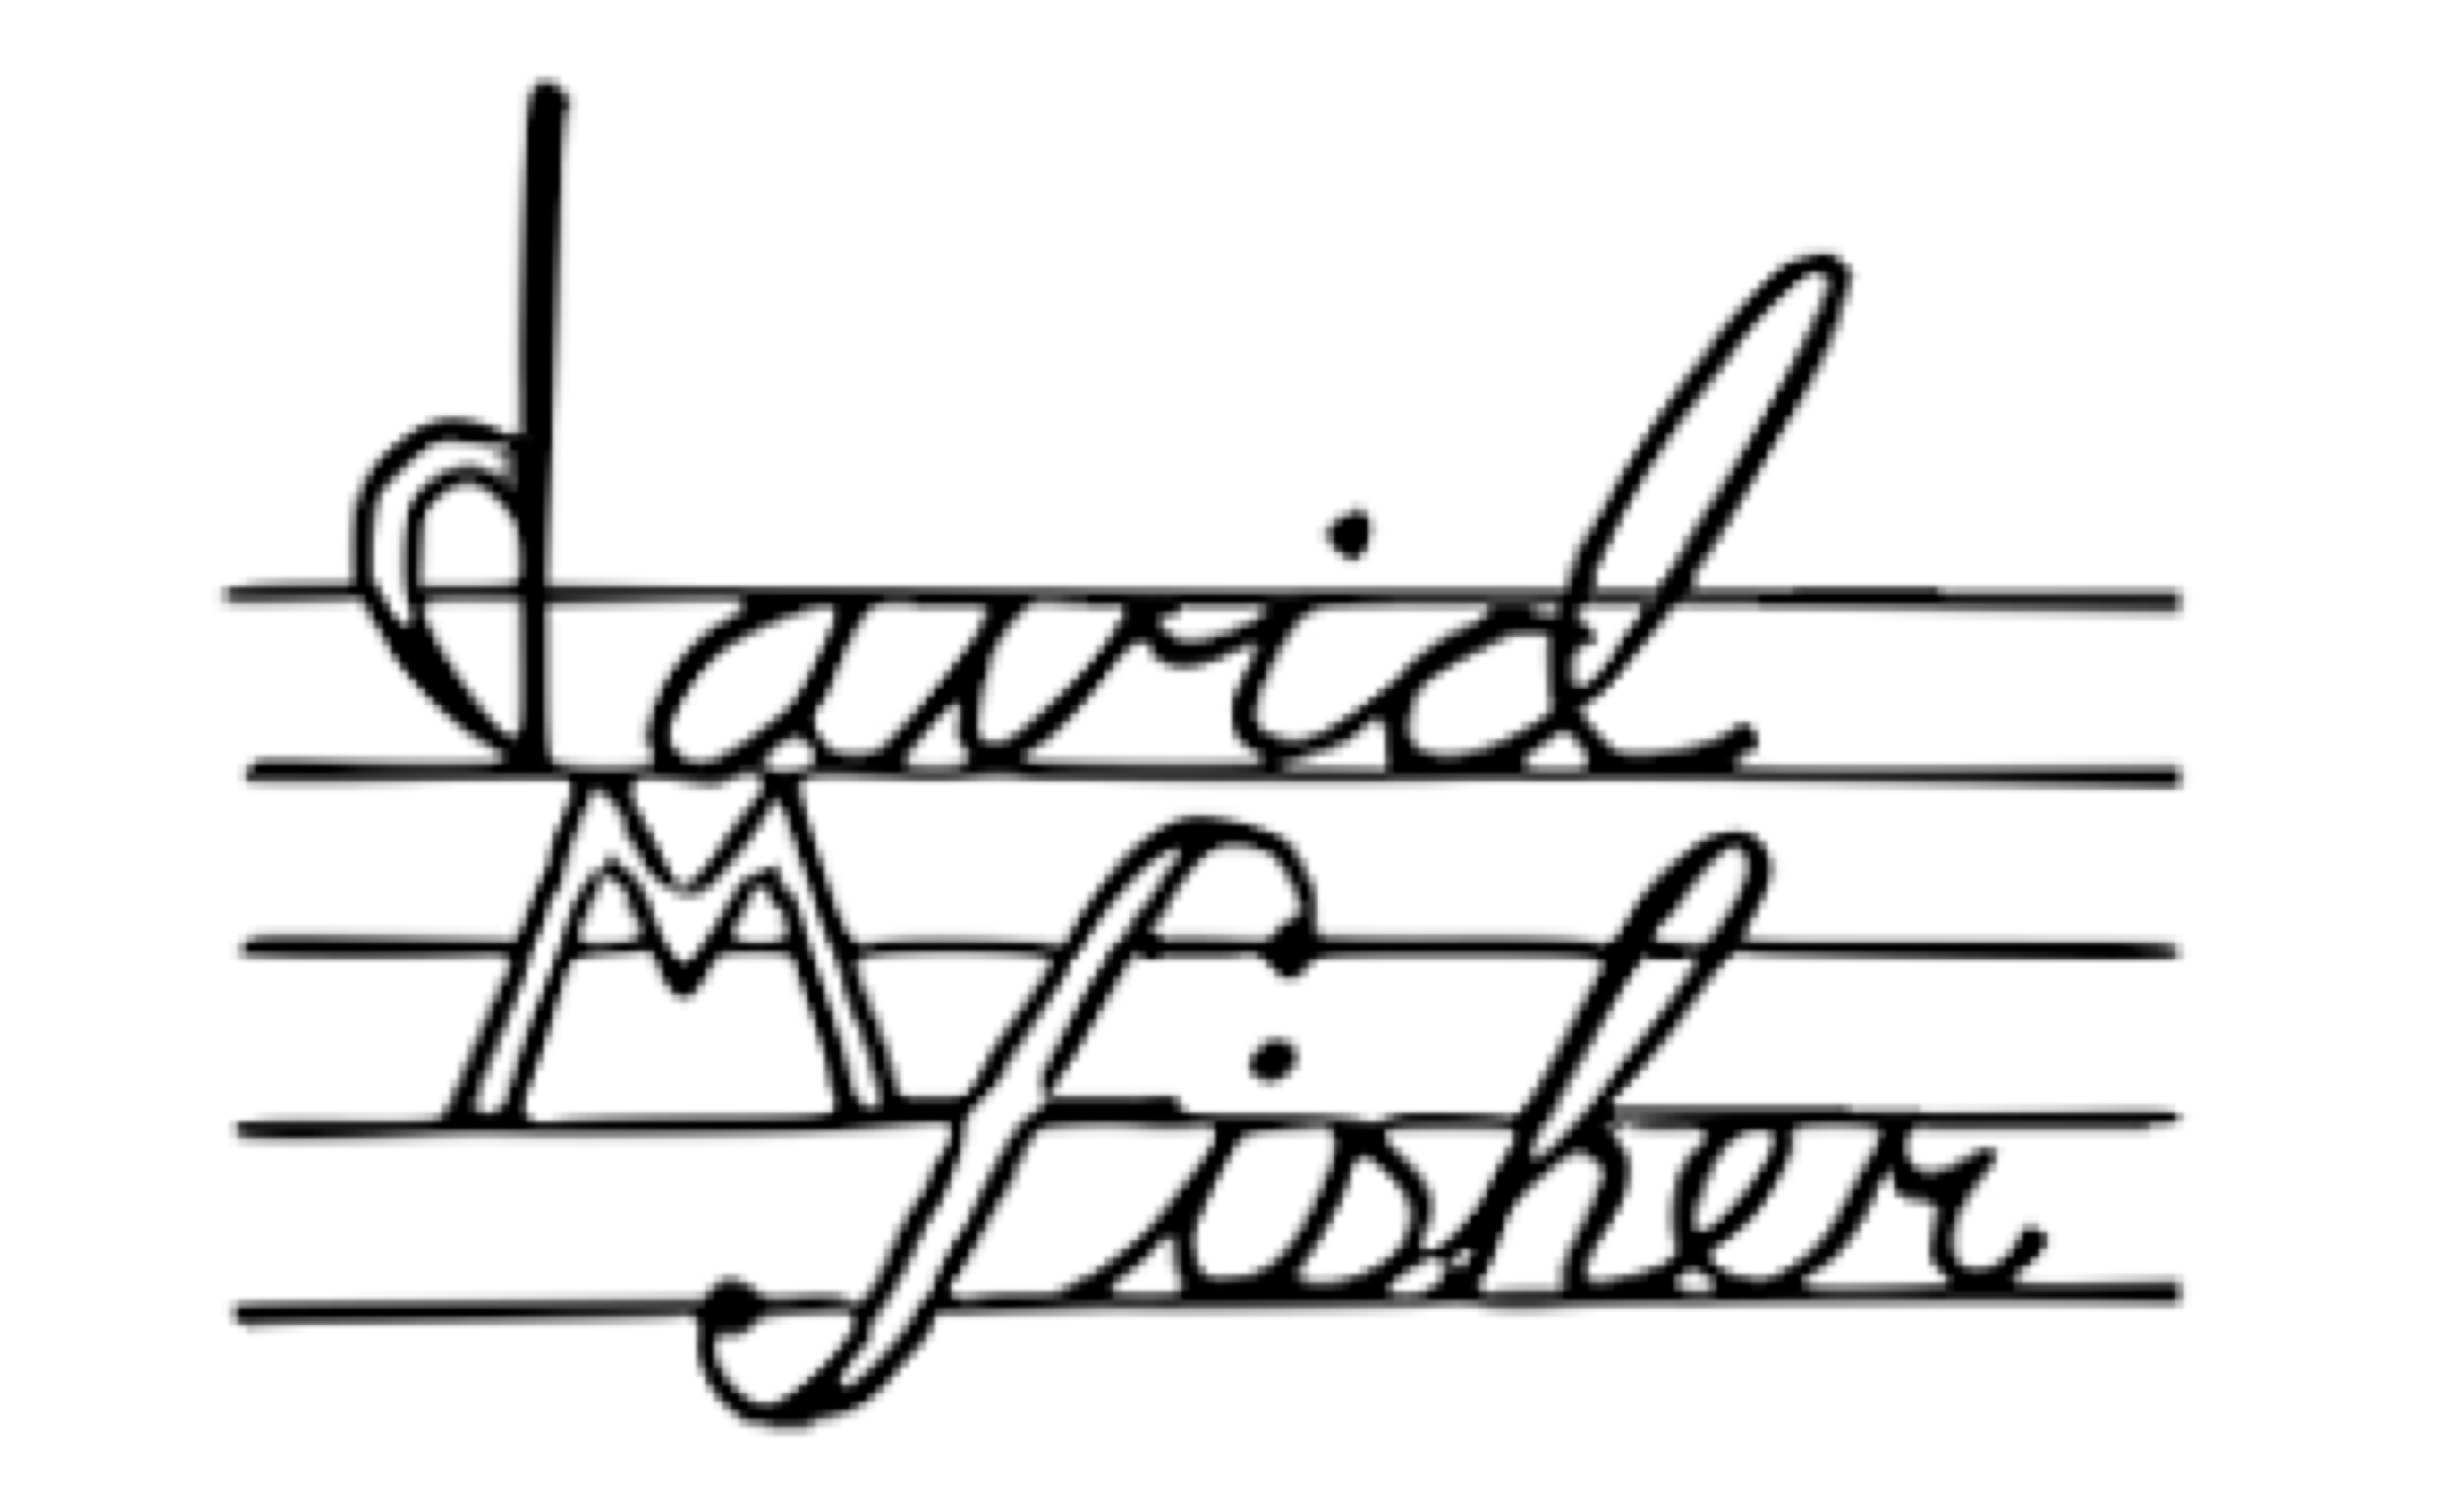 david-m-fisher-signature-copy